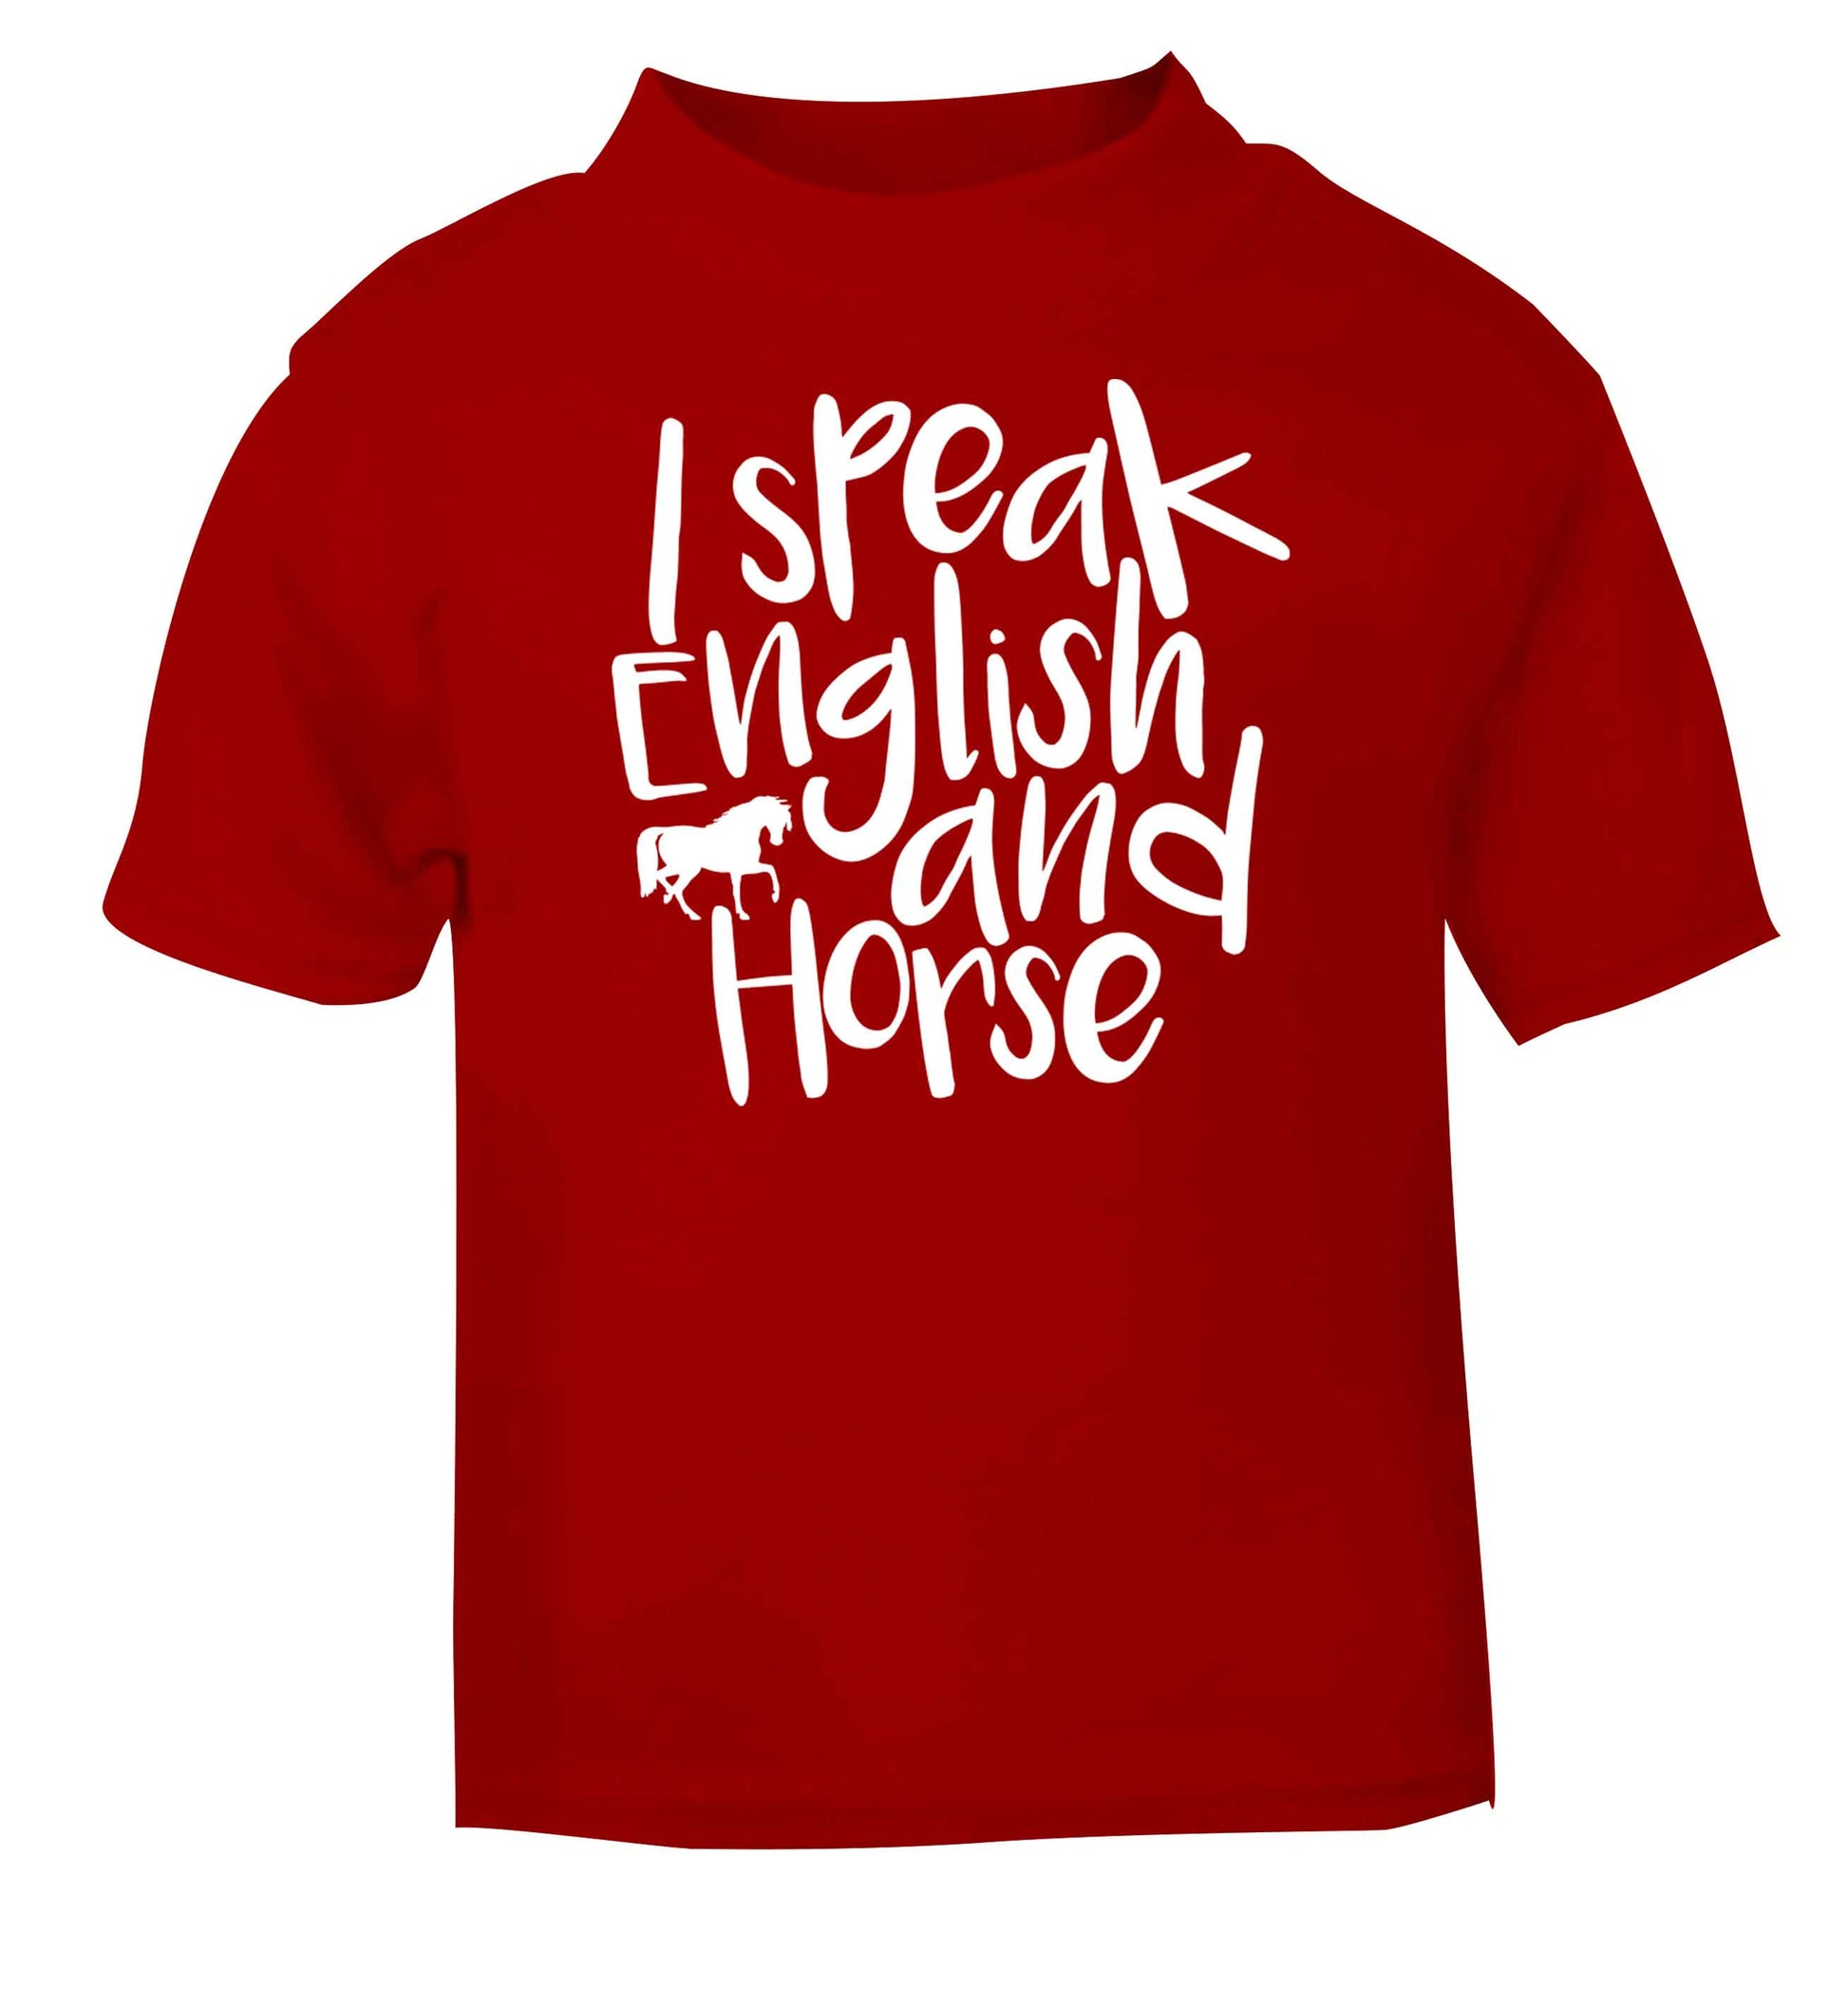 I speak English and horse red baby toddler Tshirt 2 Years